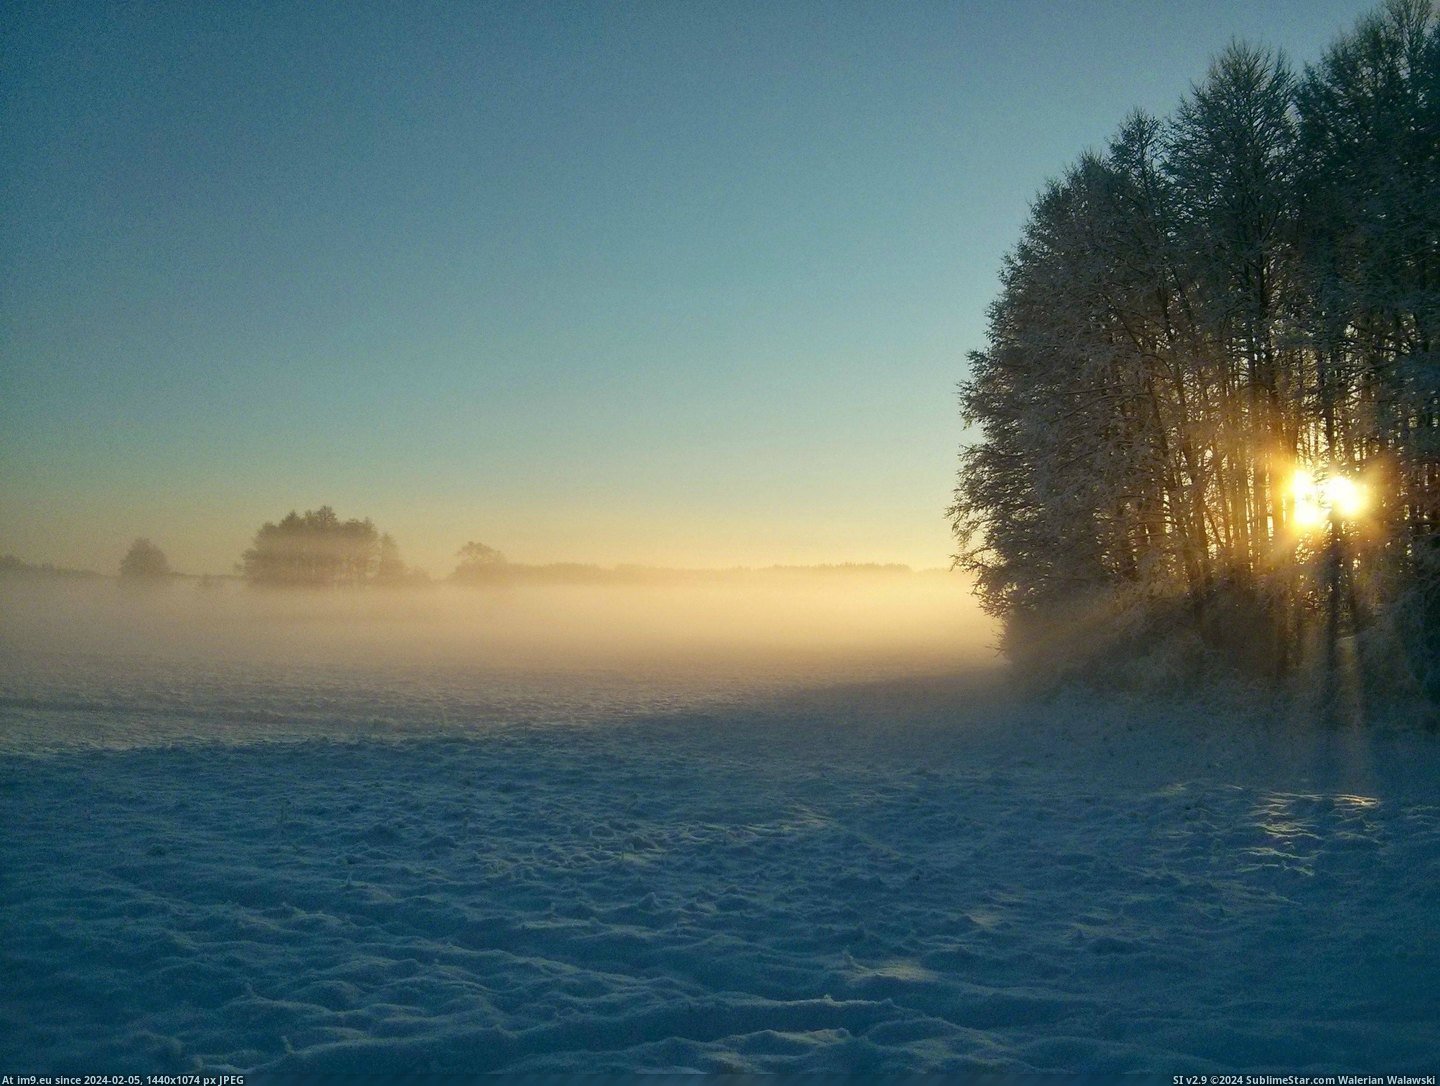 #Wallpaper #Beautiful #Wide #Misty #Pomerania #3264x2448 #Poland #Evening [Earthporn] Misty evening in Pomerania, Poland [OC][3264x2448] Pic. (Image of album My r/EARTHPORN favs))